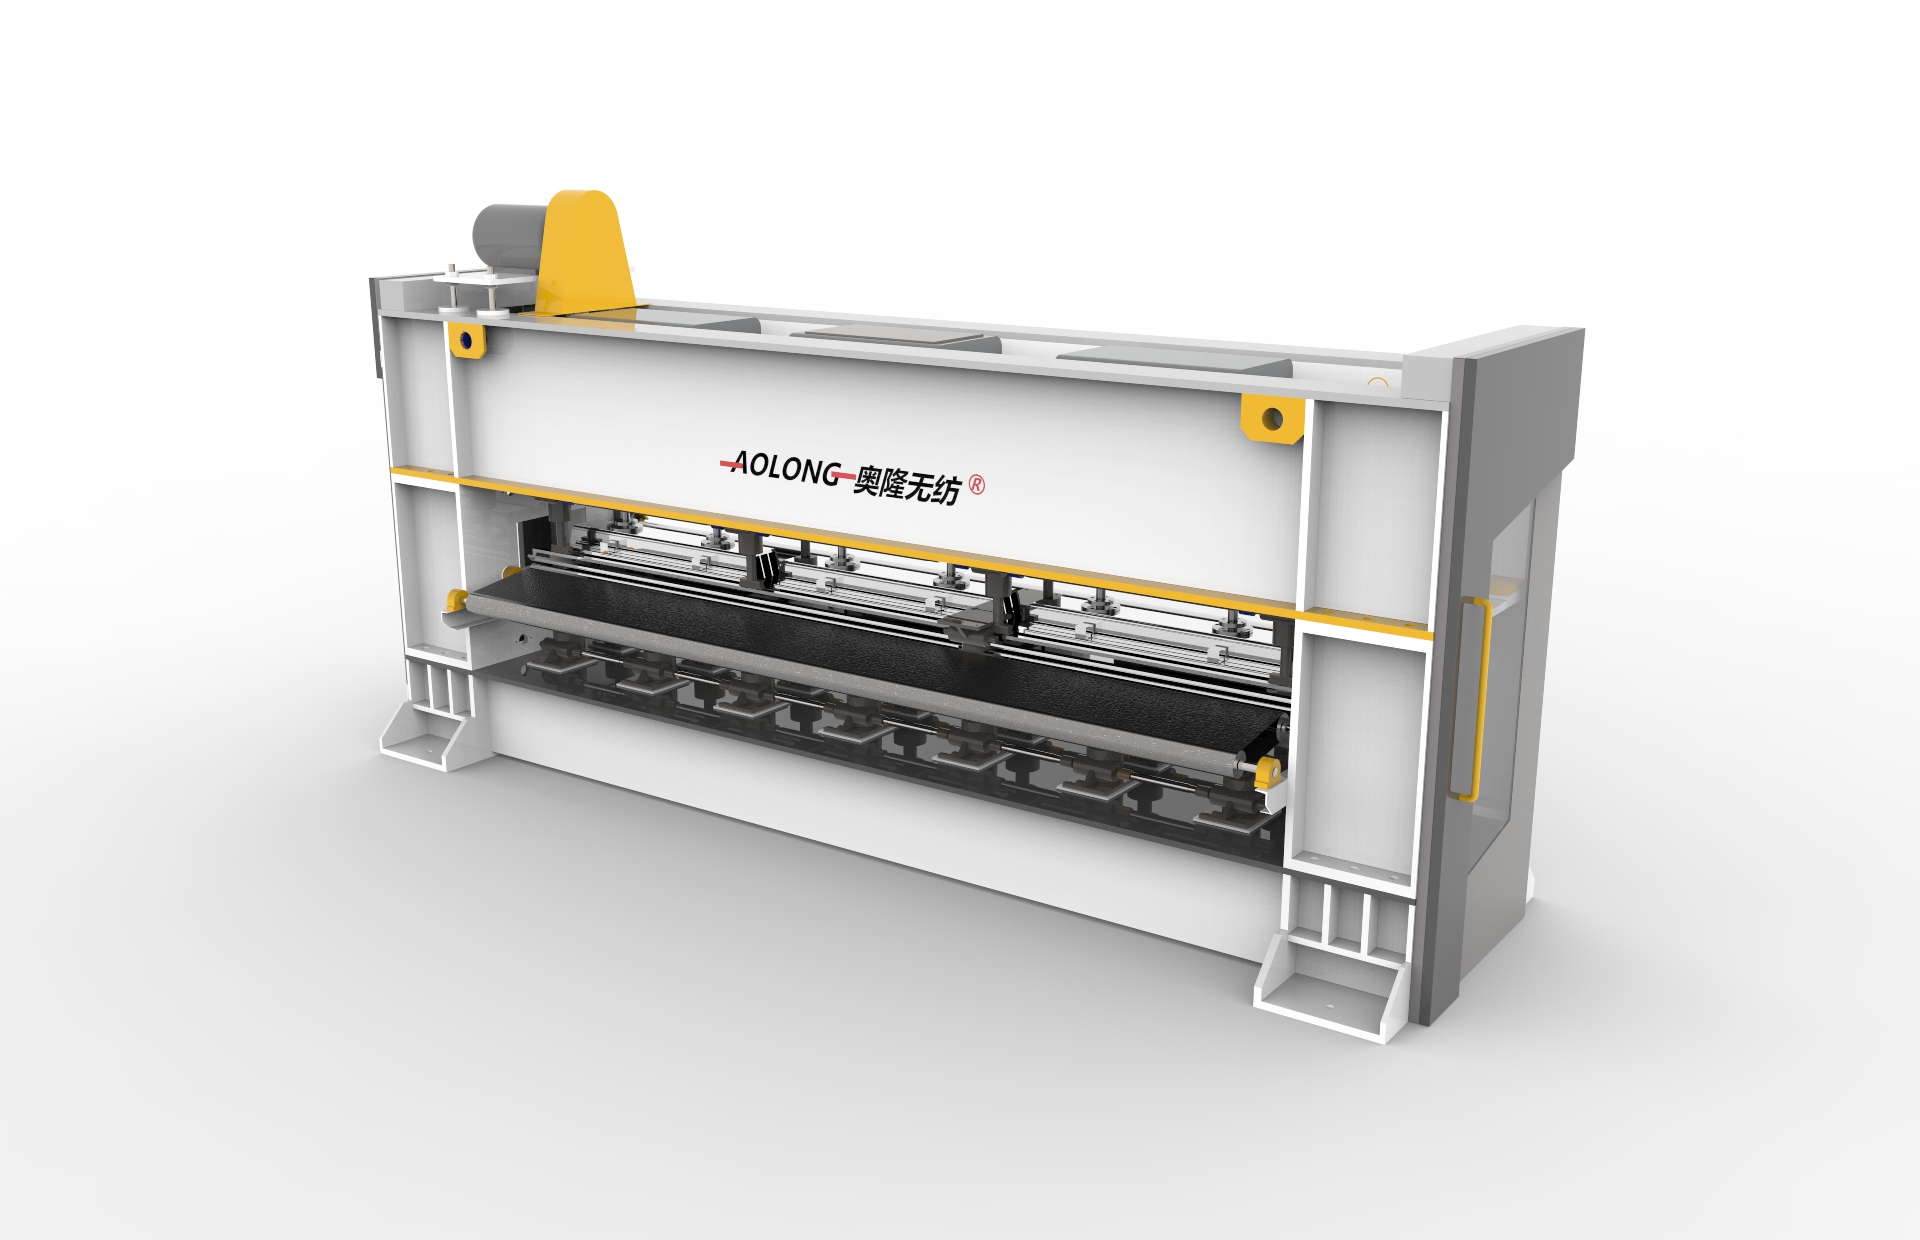 ALZC--ماشین آلات نبافته دستگاه تولید پارچه غیر بافته سوزن با سرعت بالا